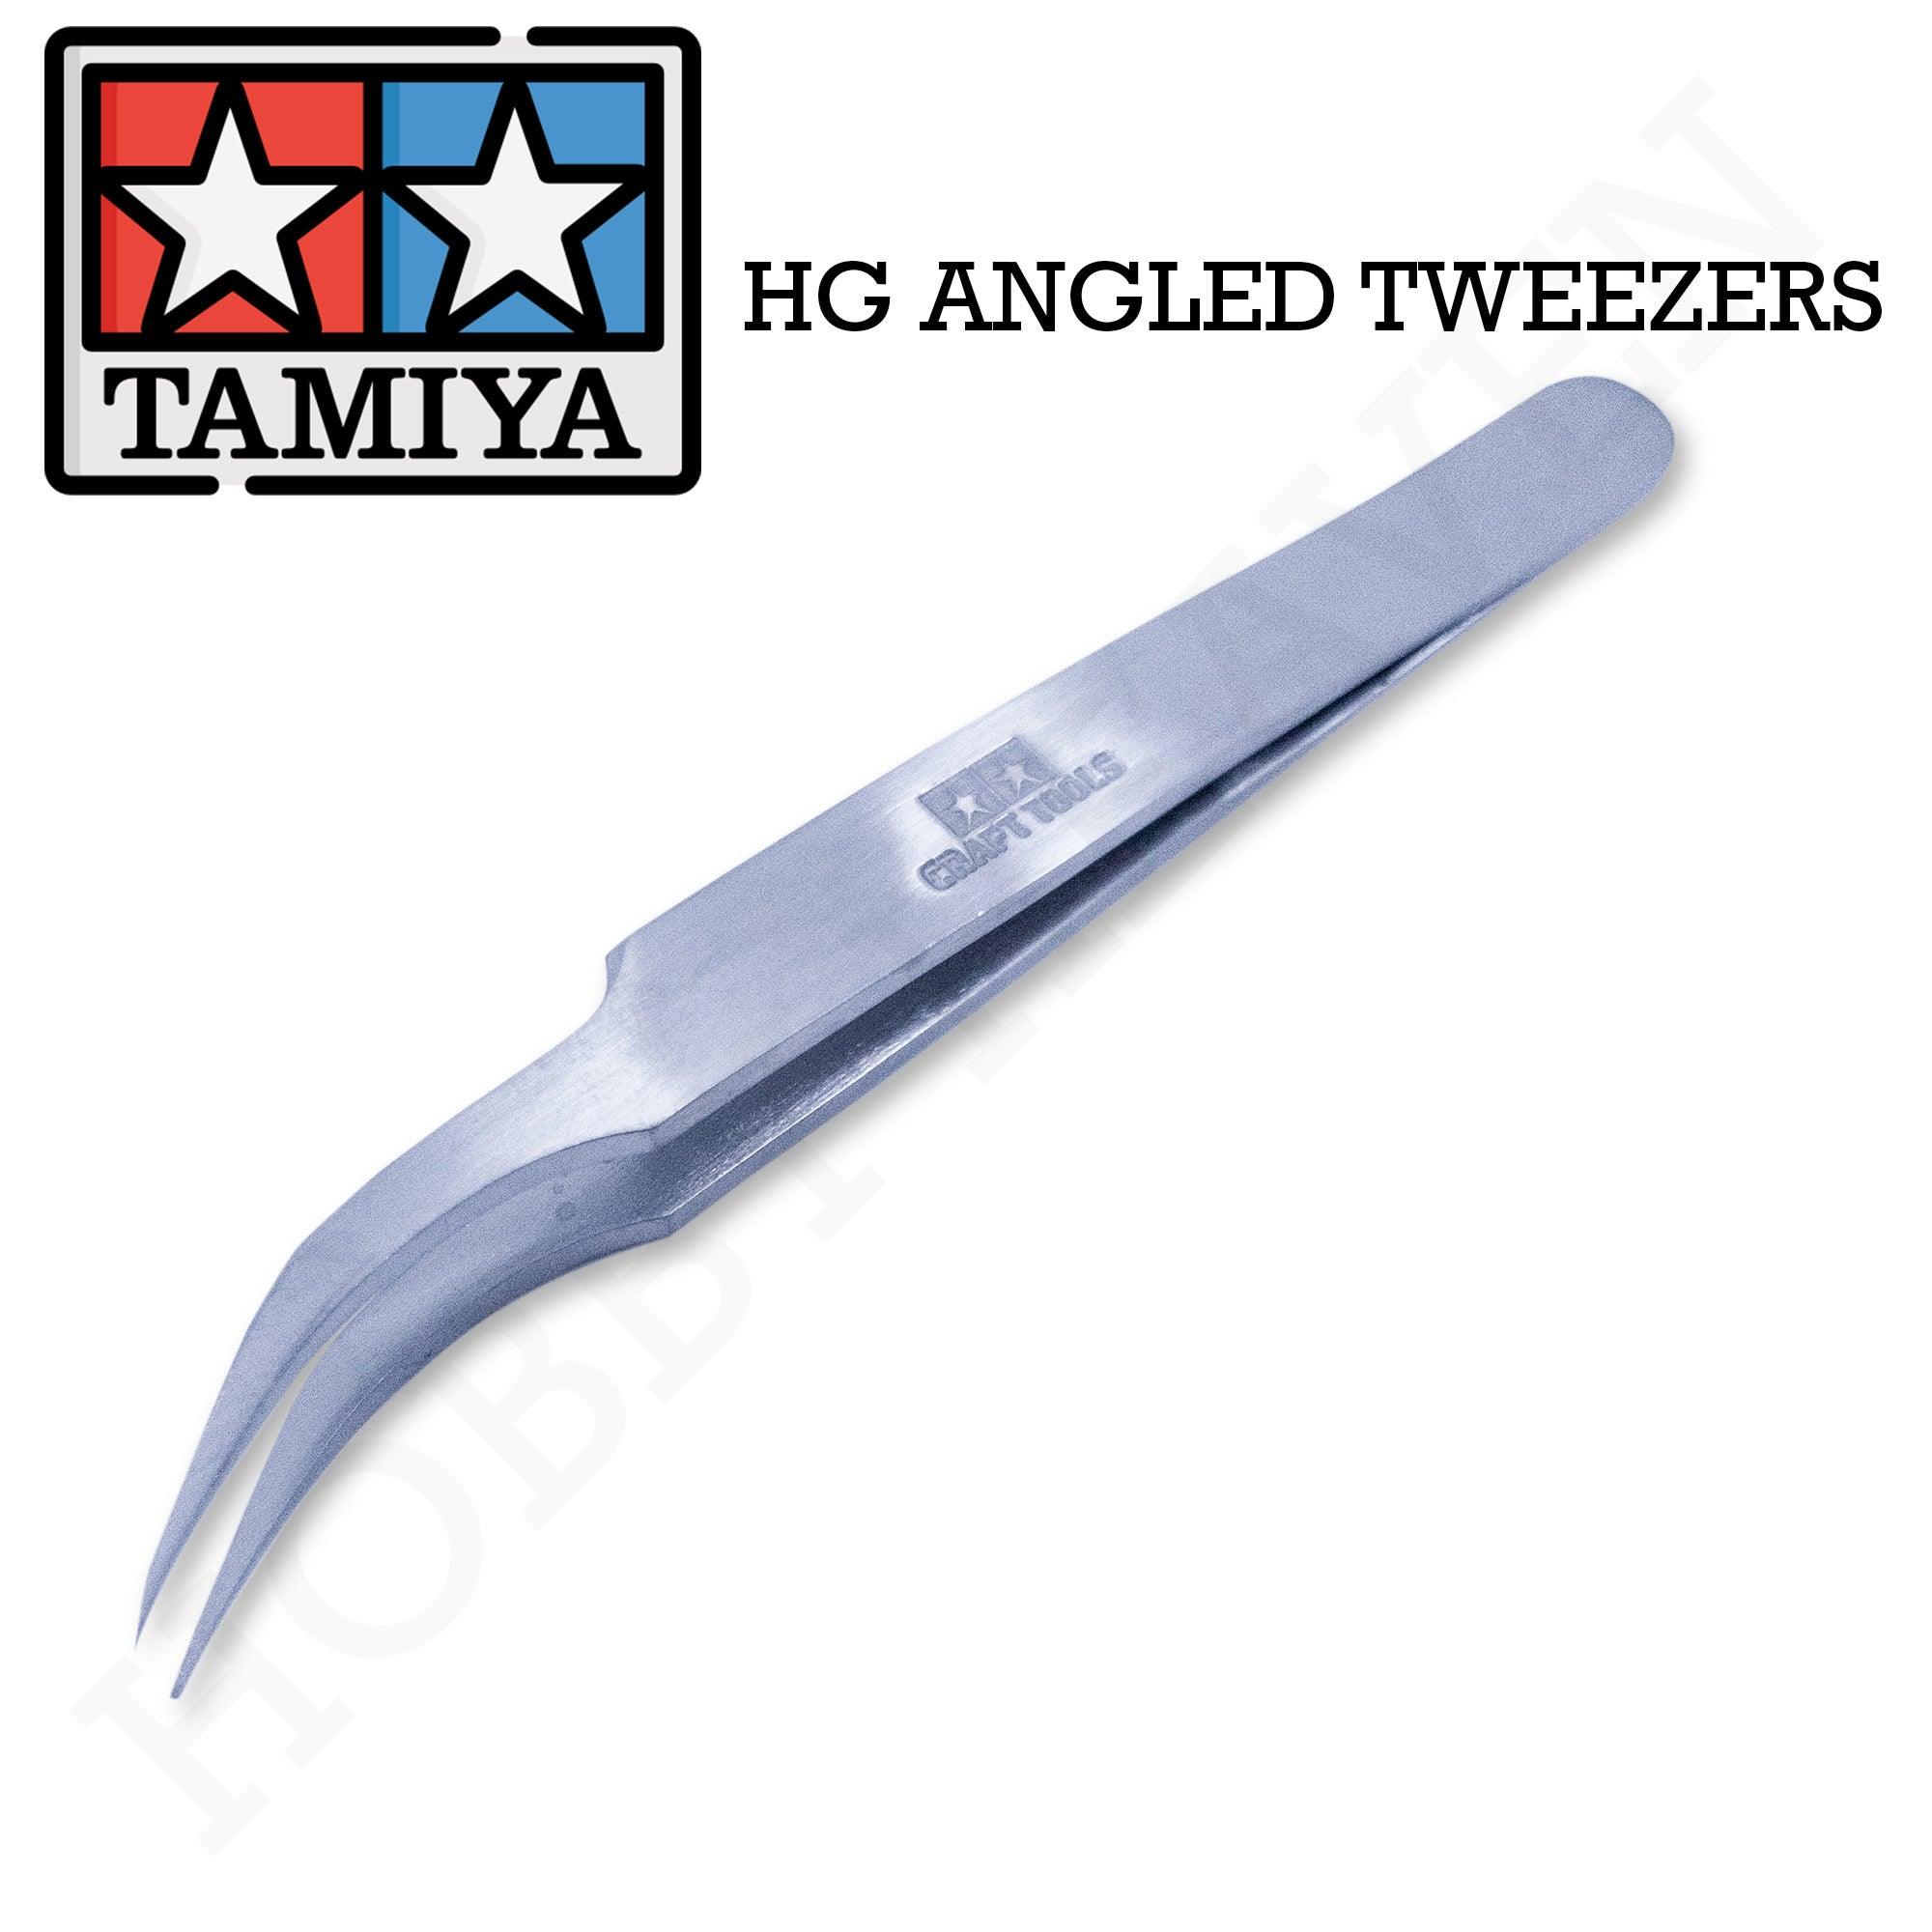 Tamiya Craft Tweezers USA Seller